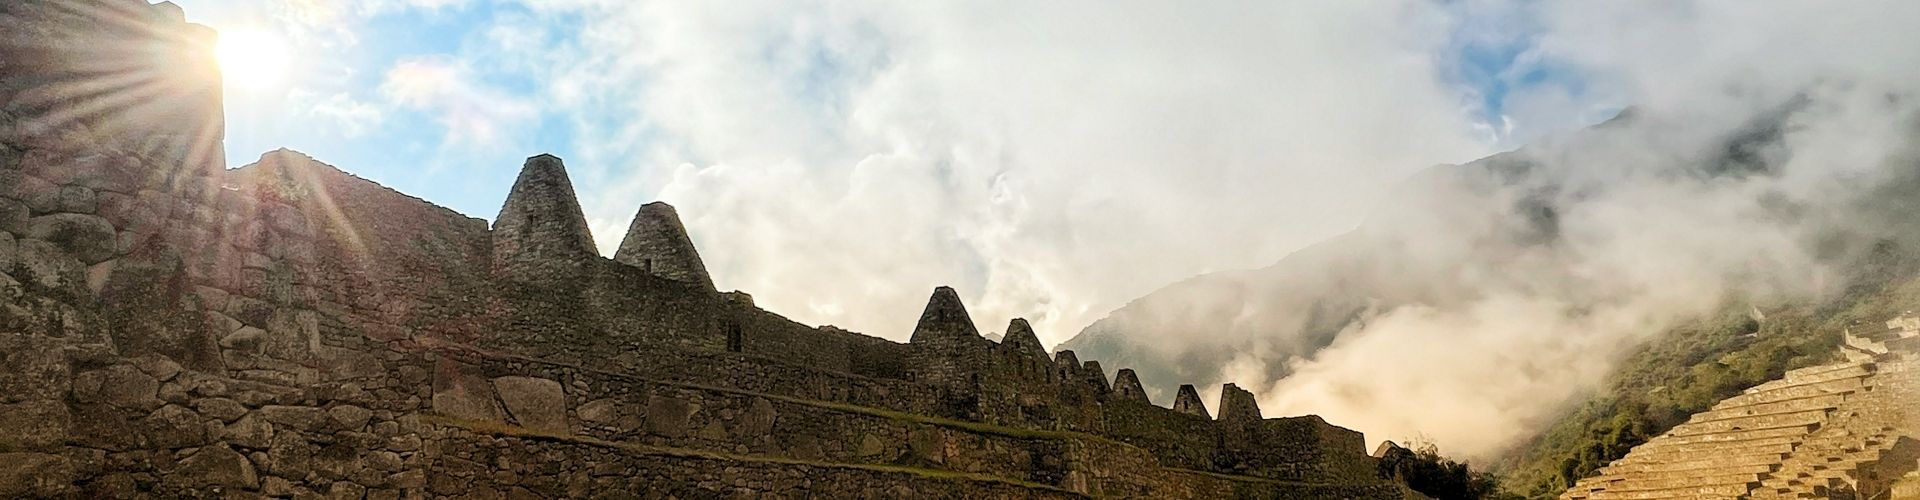 What Permits Do I Need for the Machu Picchu Hike?